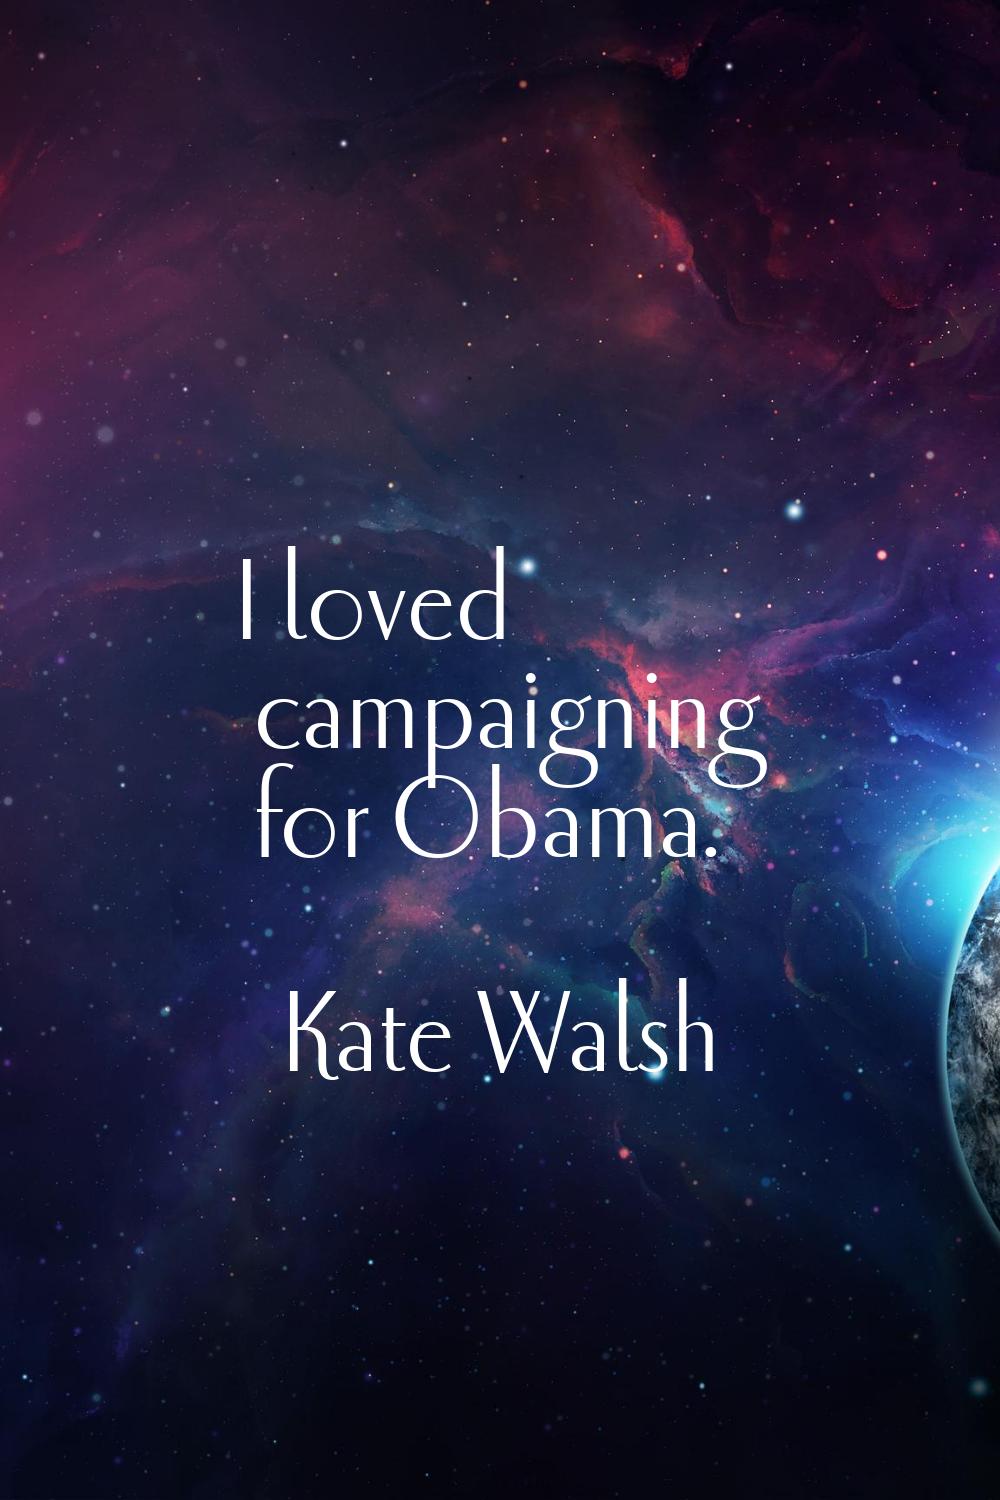 I loved campaigning for Obama.